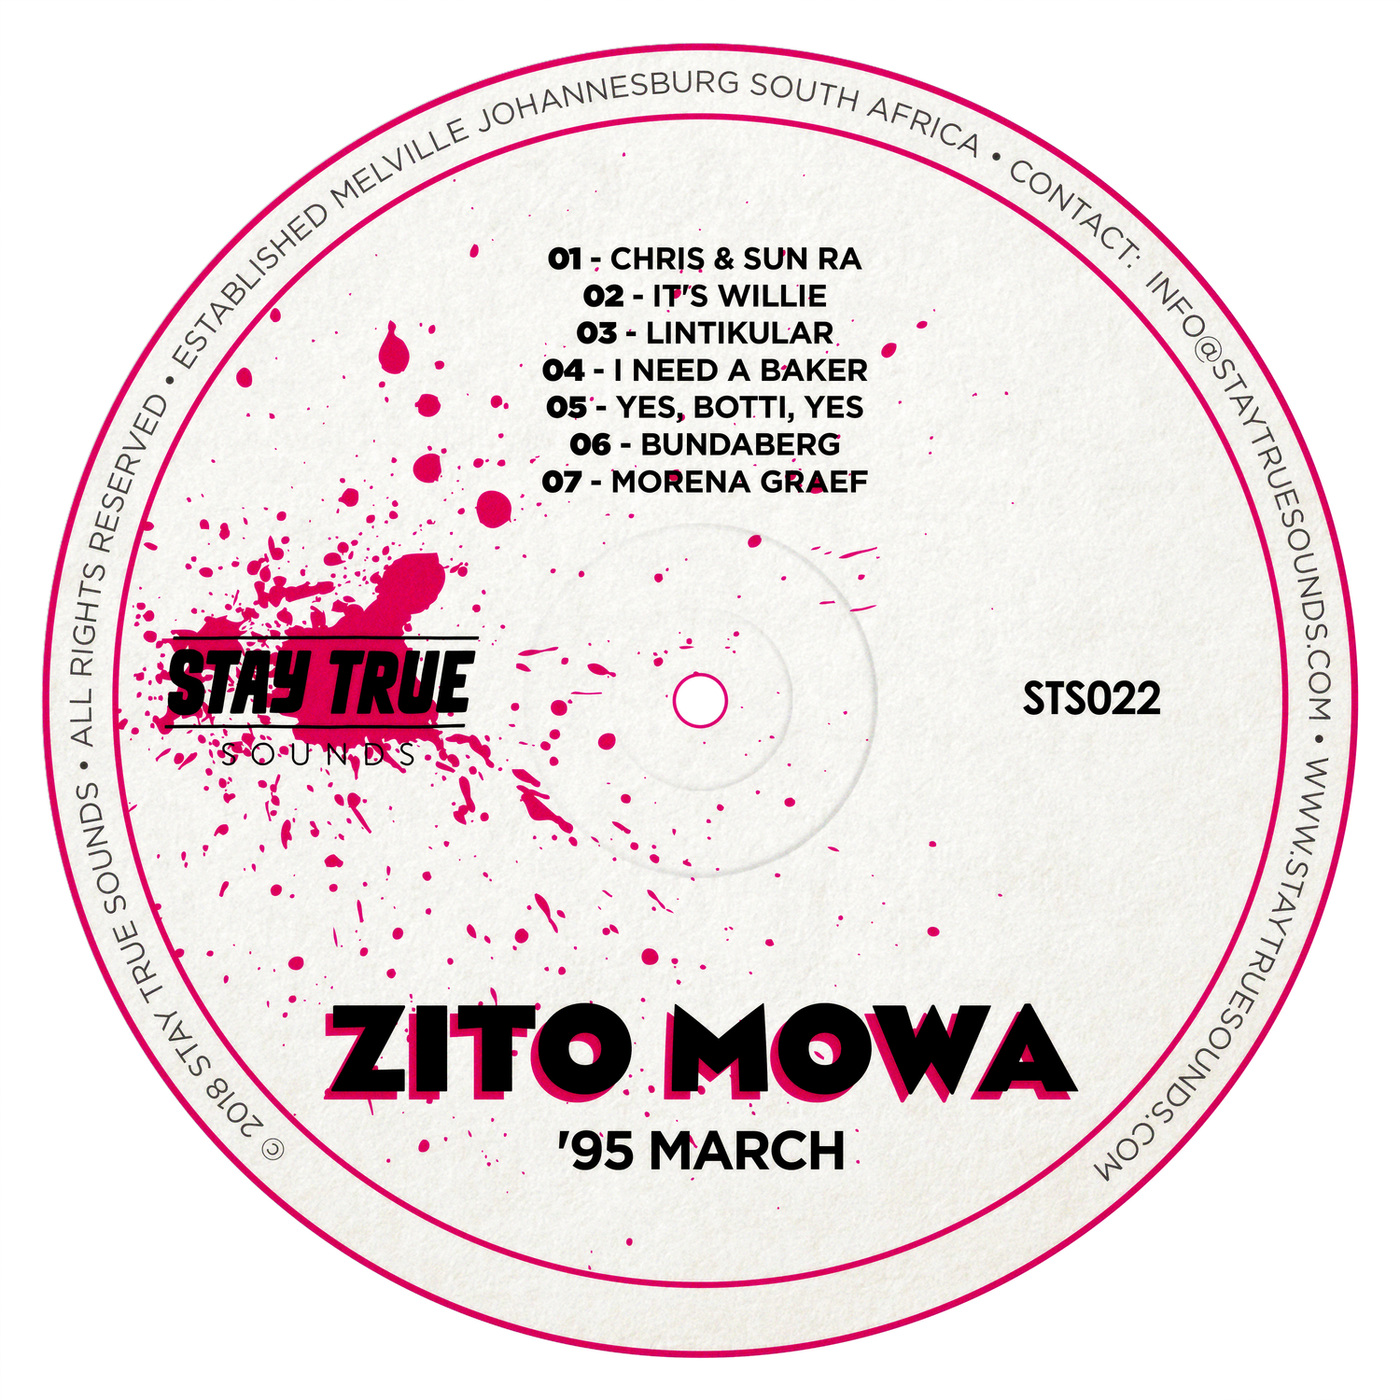 Zito Mowa - '95 March / Stay True Sounds